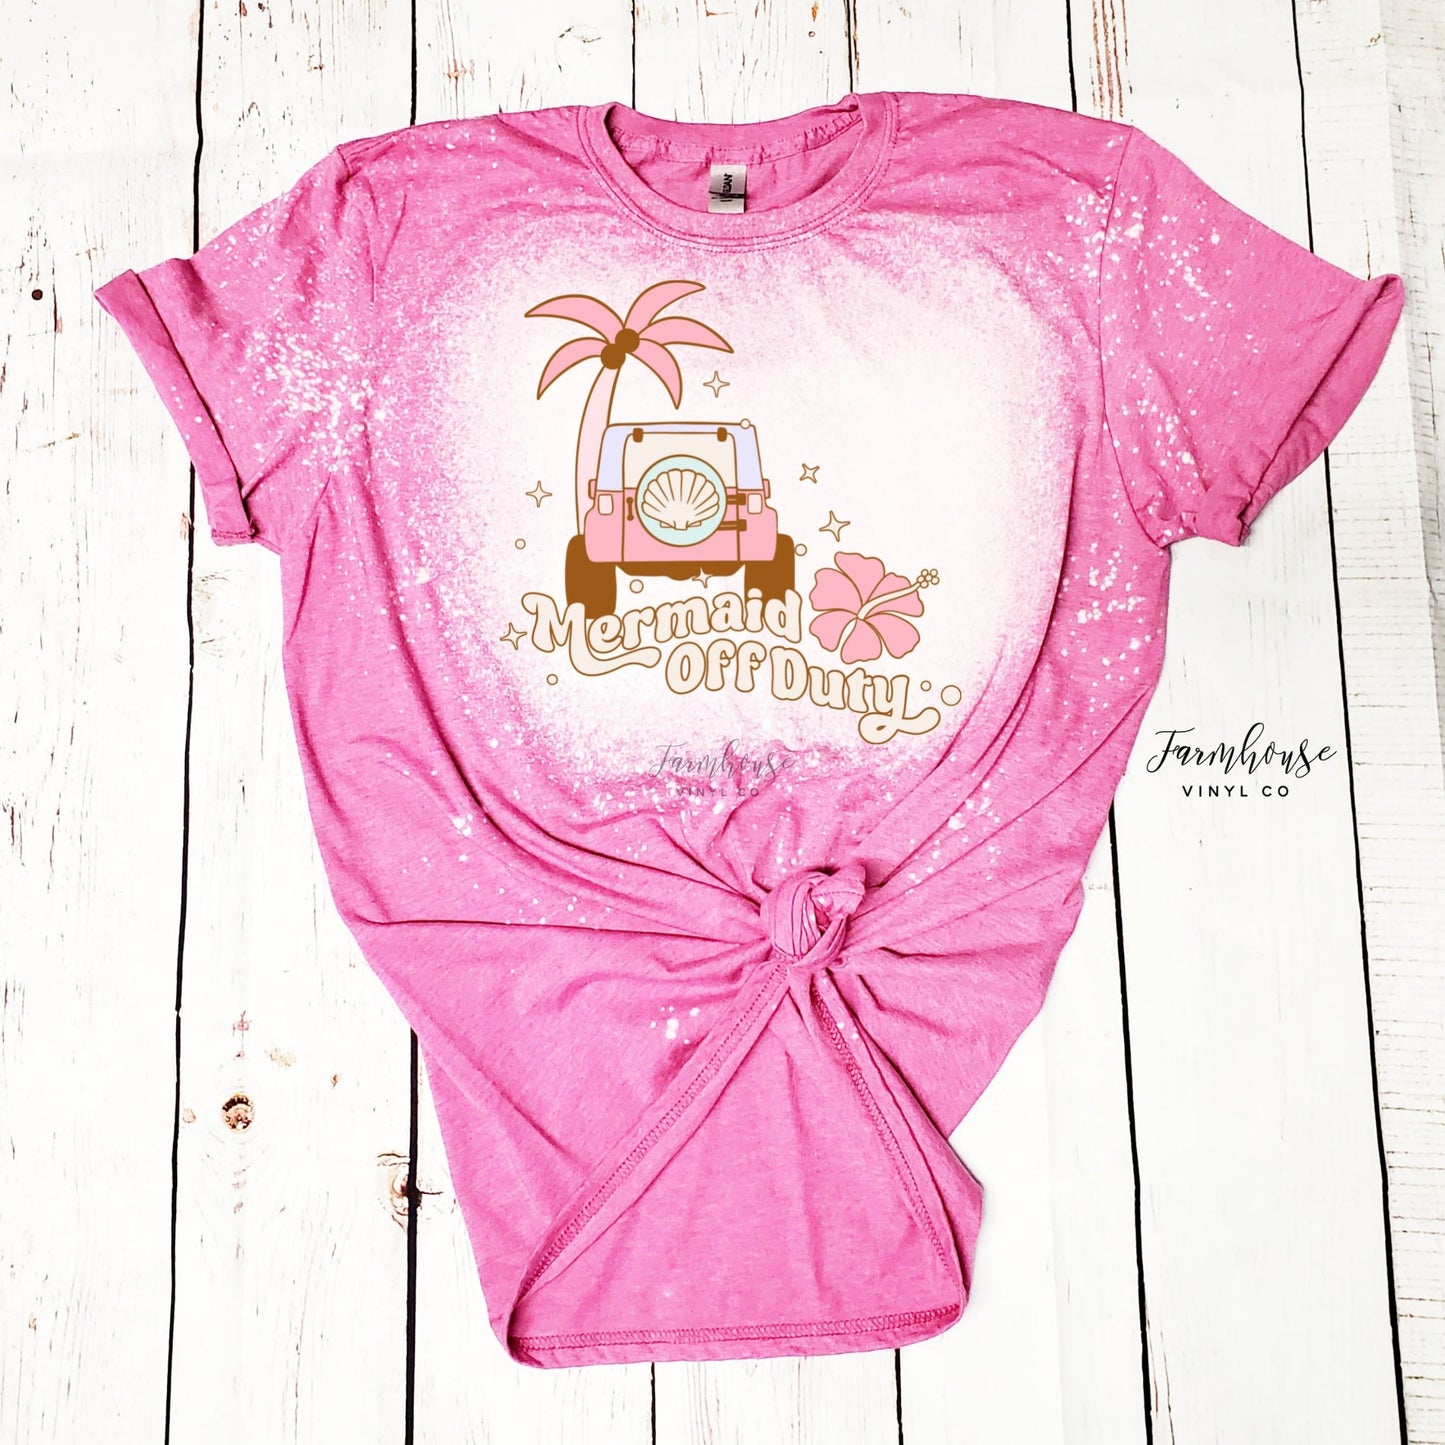 Mermaid Off Duty Beach Shirt / Trendy shirt / Summer BBQ Shirts / Children Summer Tees / 4th of July Kid TShirts / Beach Trip Shirts Match - Farmhouse Vinyl Co